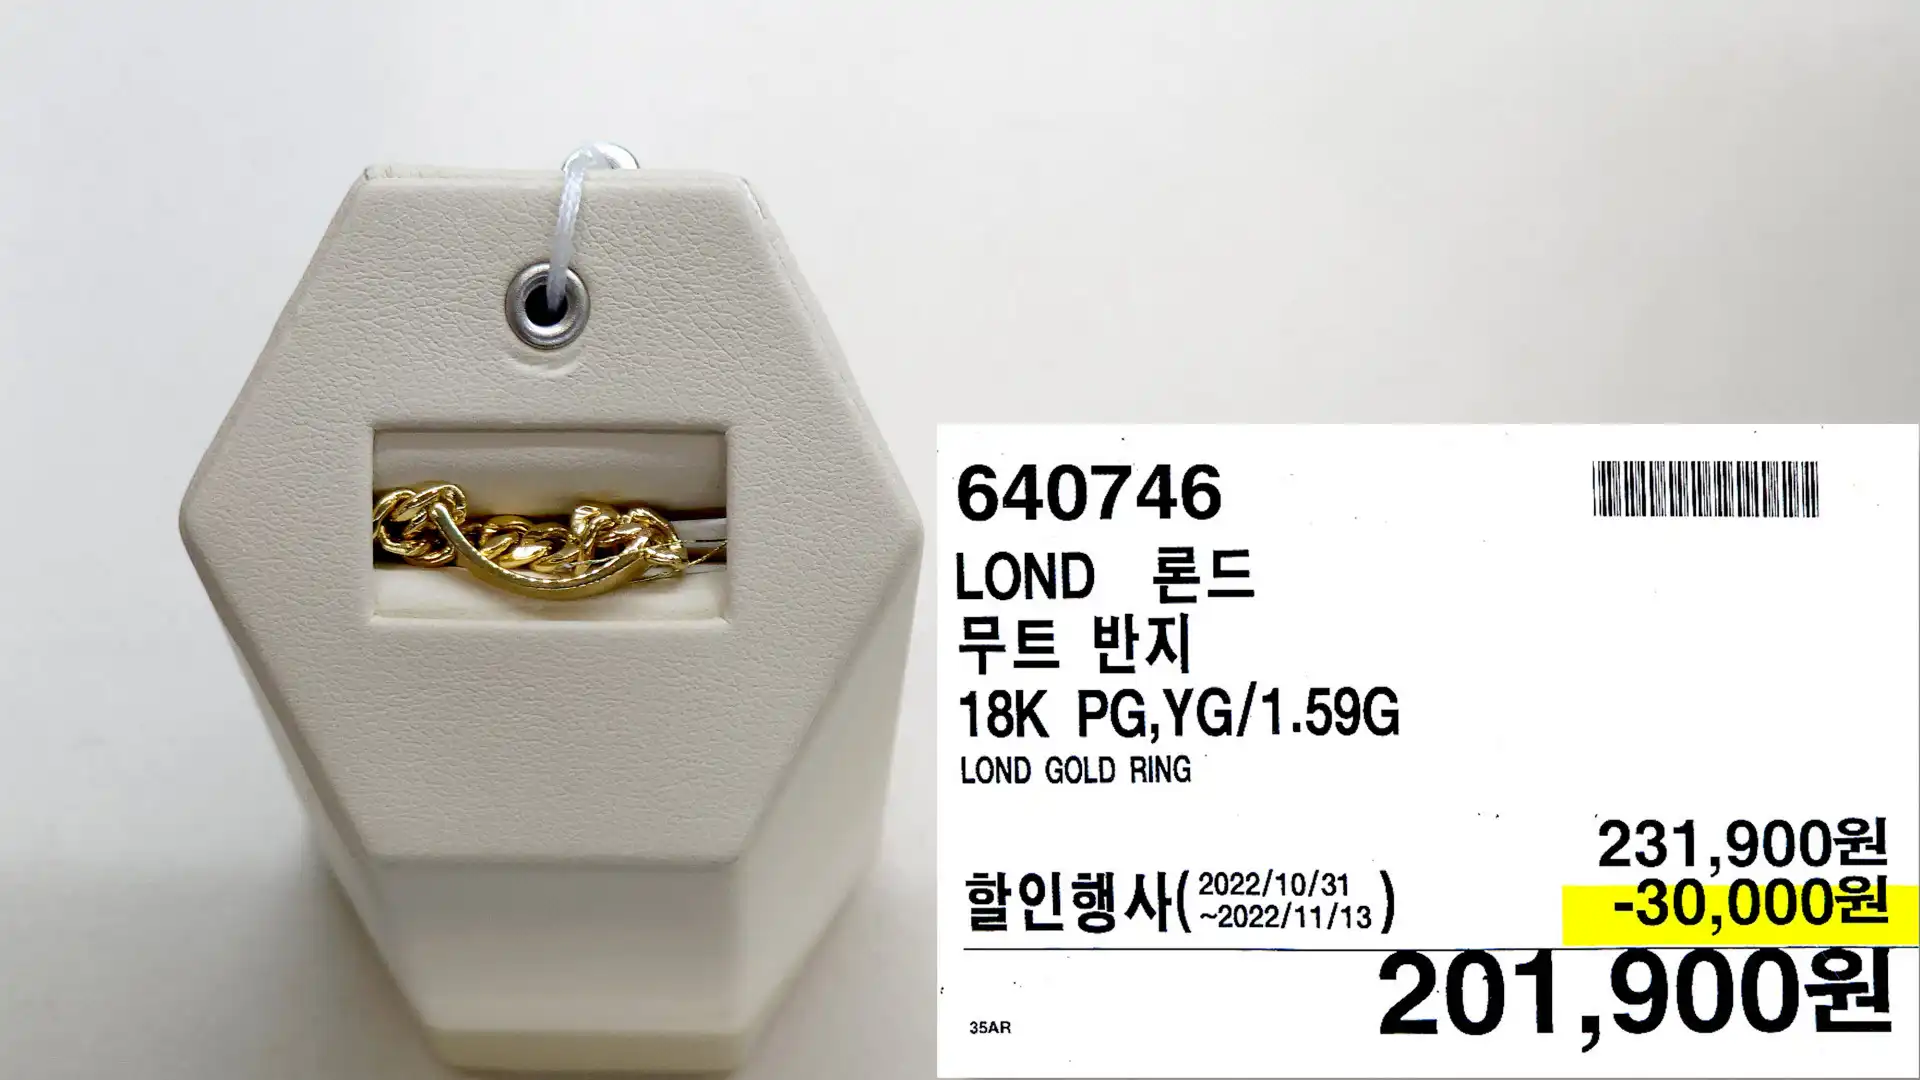 LOND 론드
무트 반지
18K PG,YG/1.59G
LOND GOLD RING
201,900원